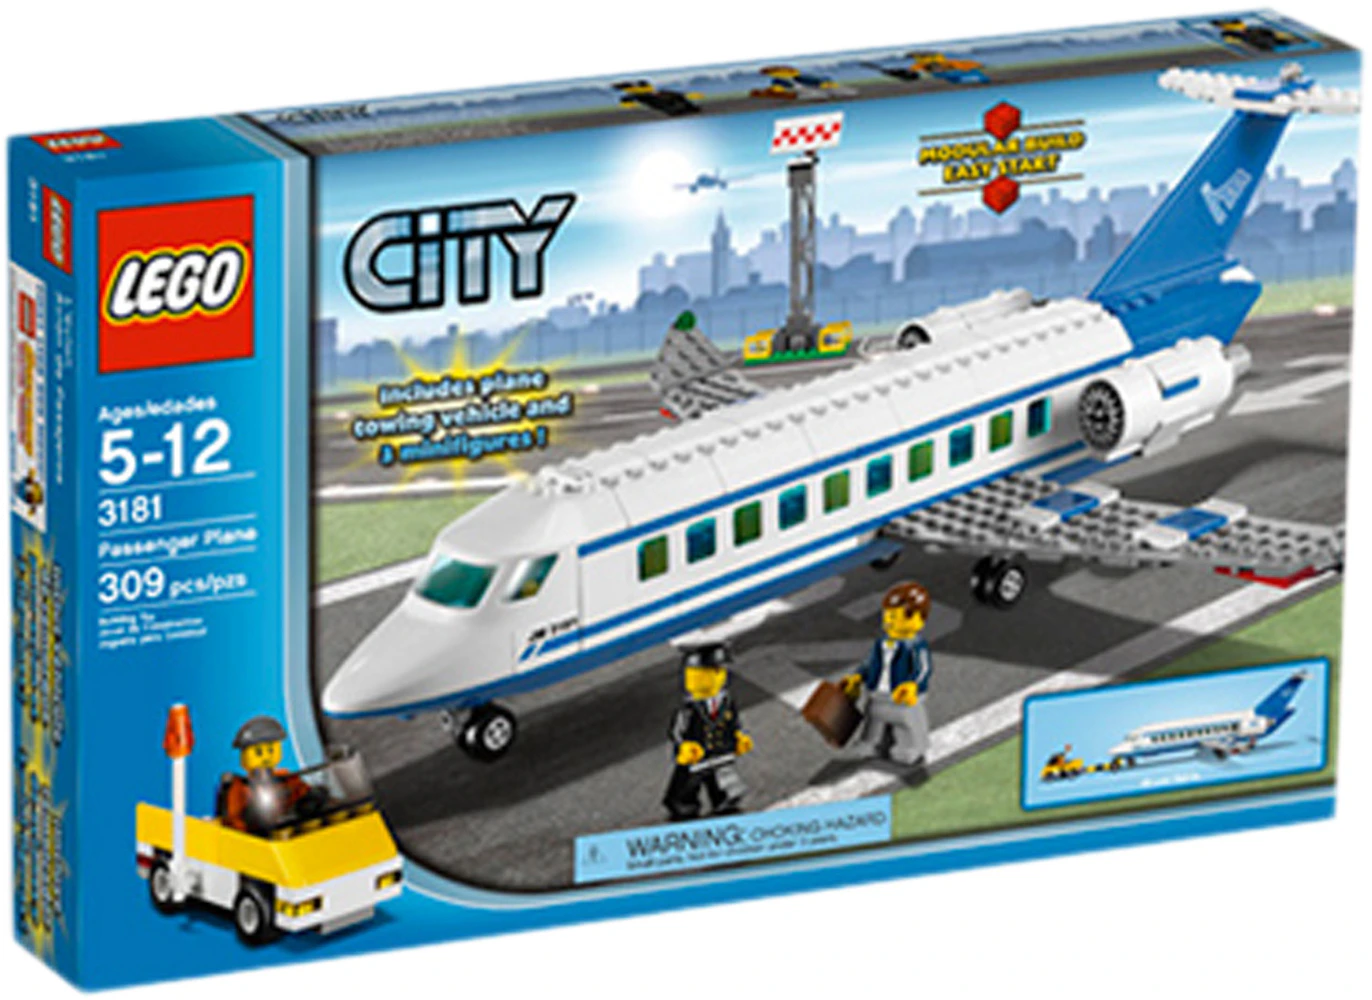 City Passenger Plane Set 3181 -